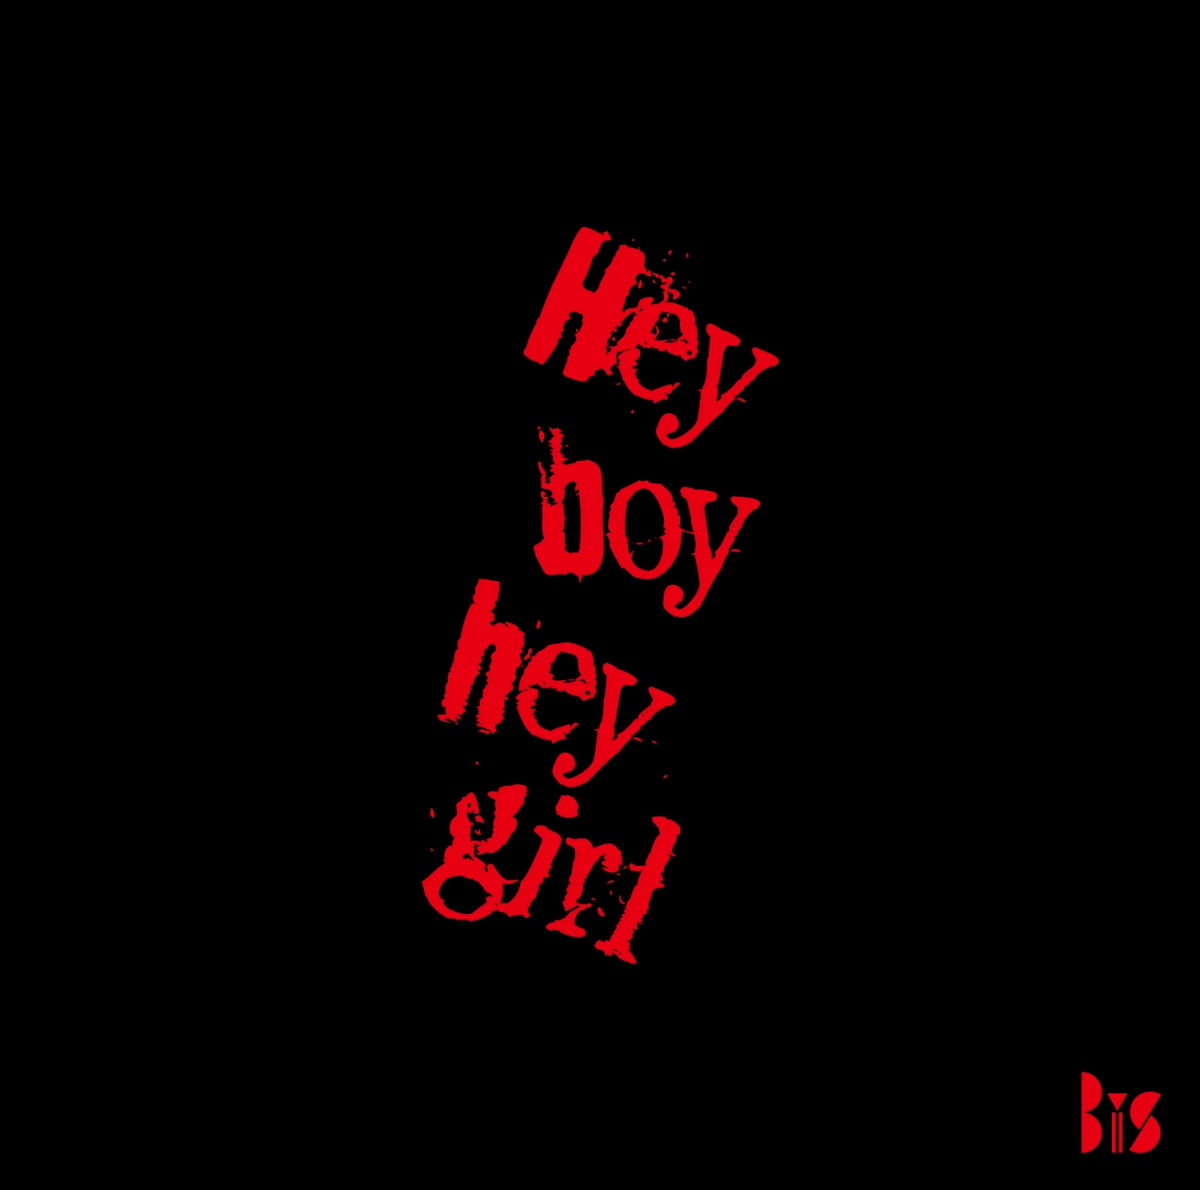 『BiS - Hey boy hey girl』収録の『Hey boy hey girl』ジャケット